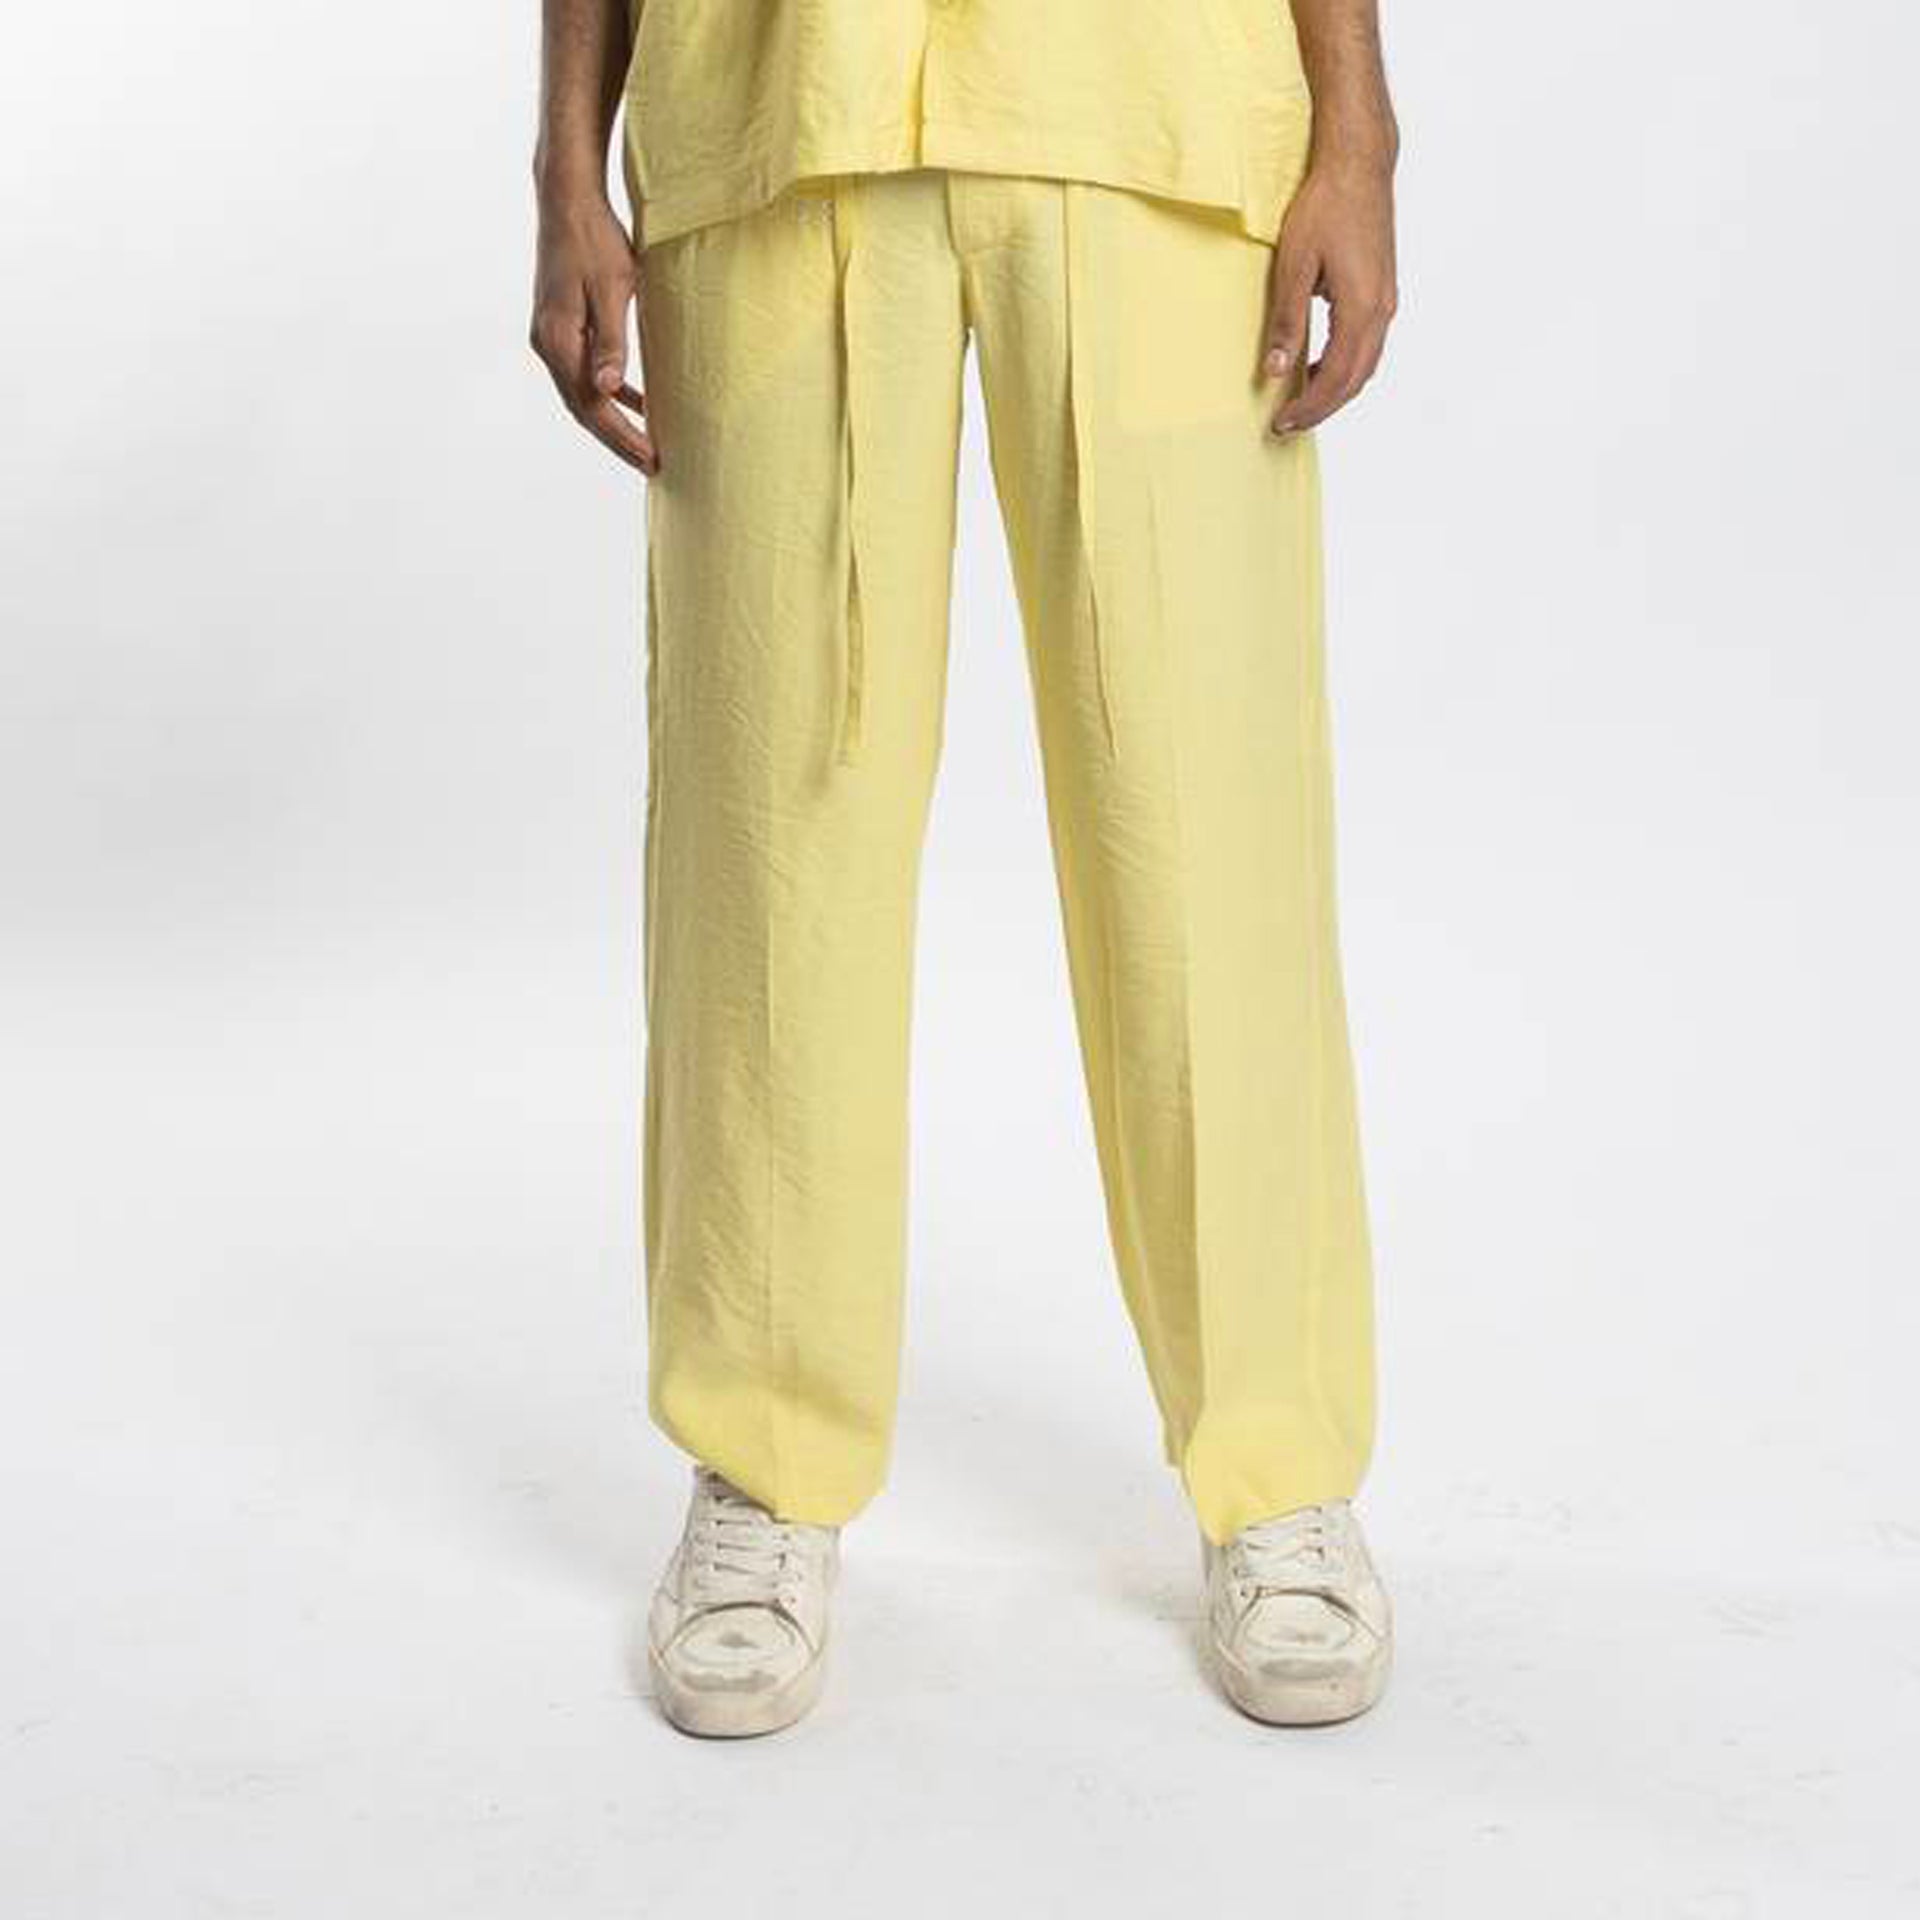 Light Yellow Linen Pants From Hajruss